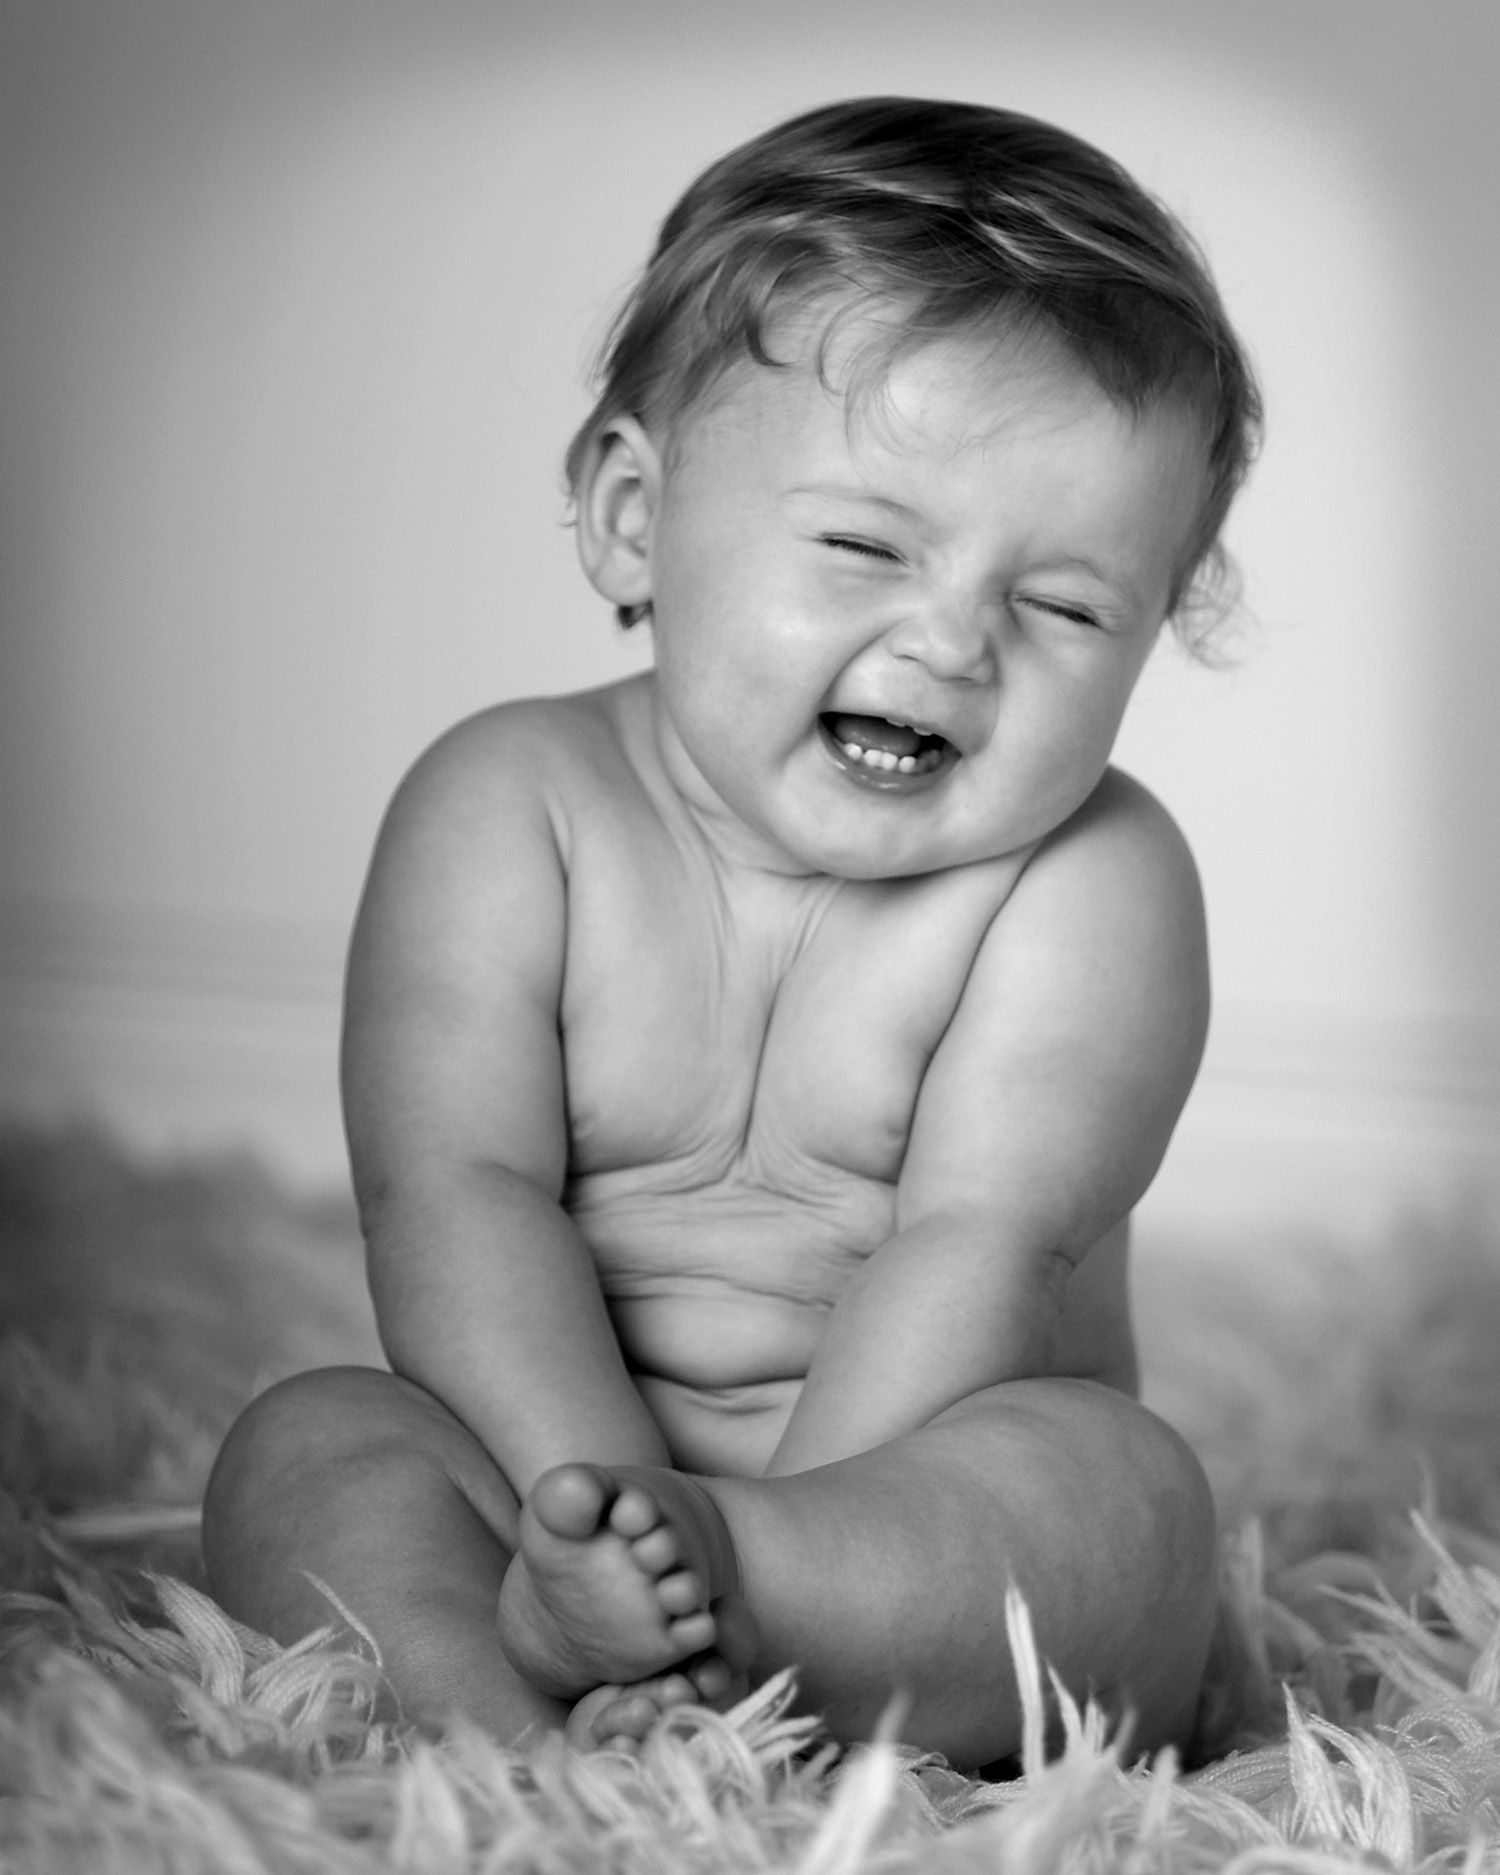 Laughing baby wallpaper